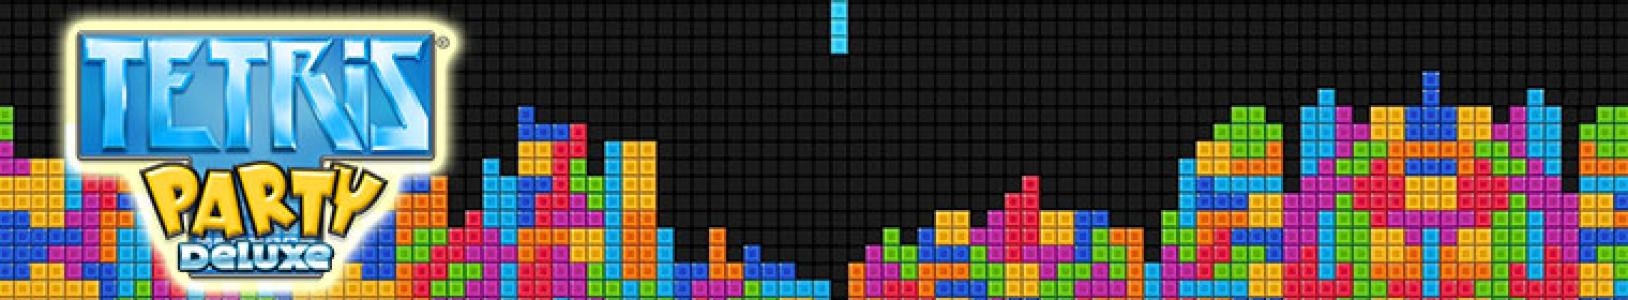 Tetris Party Deluxe banner